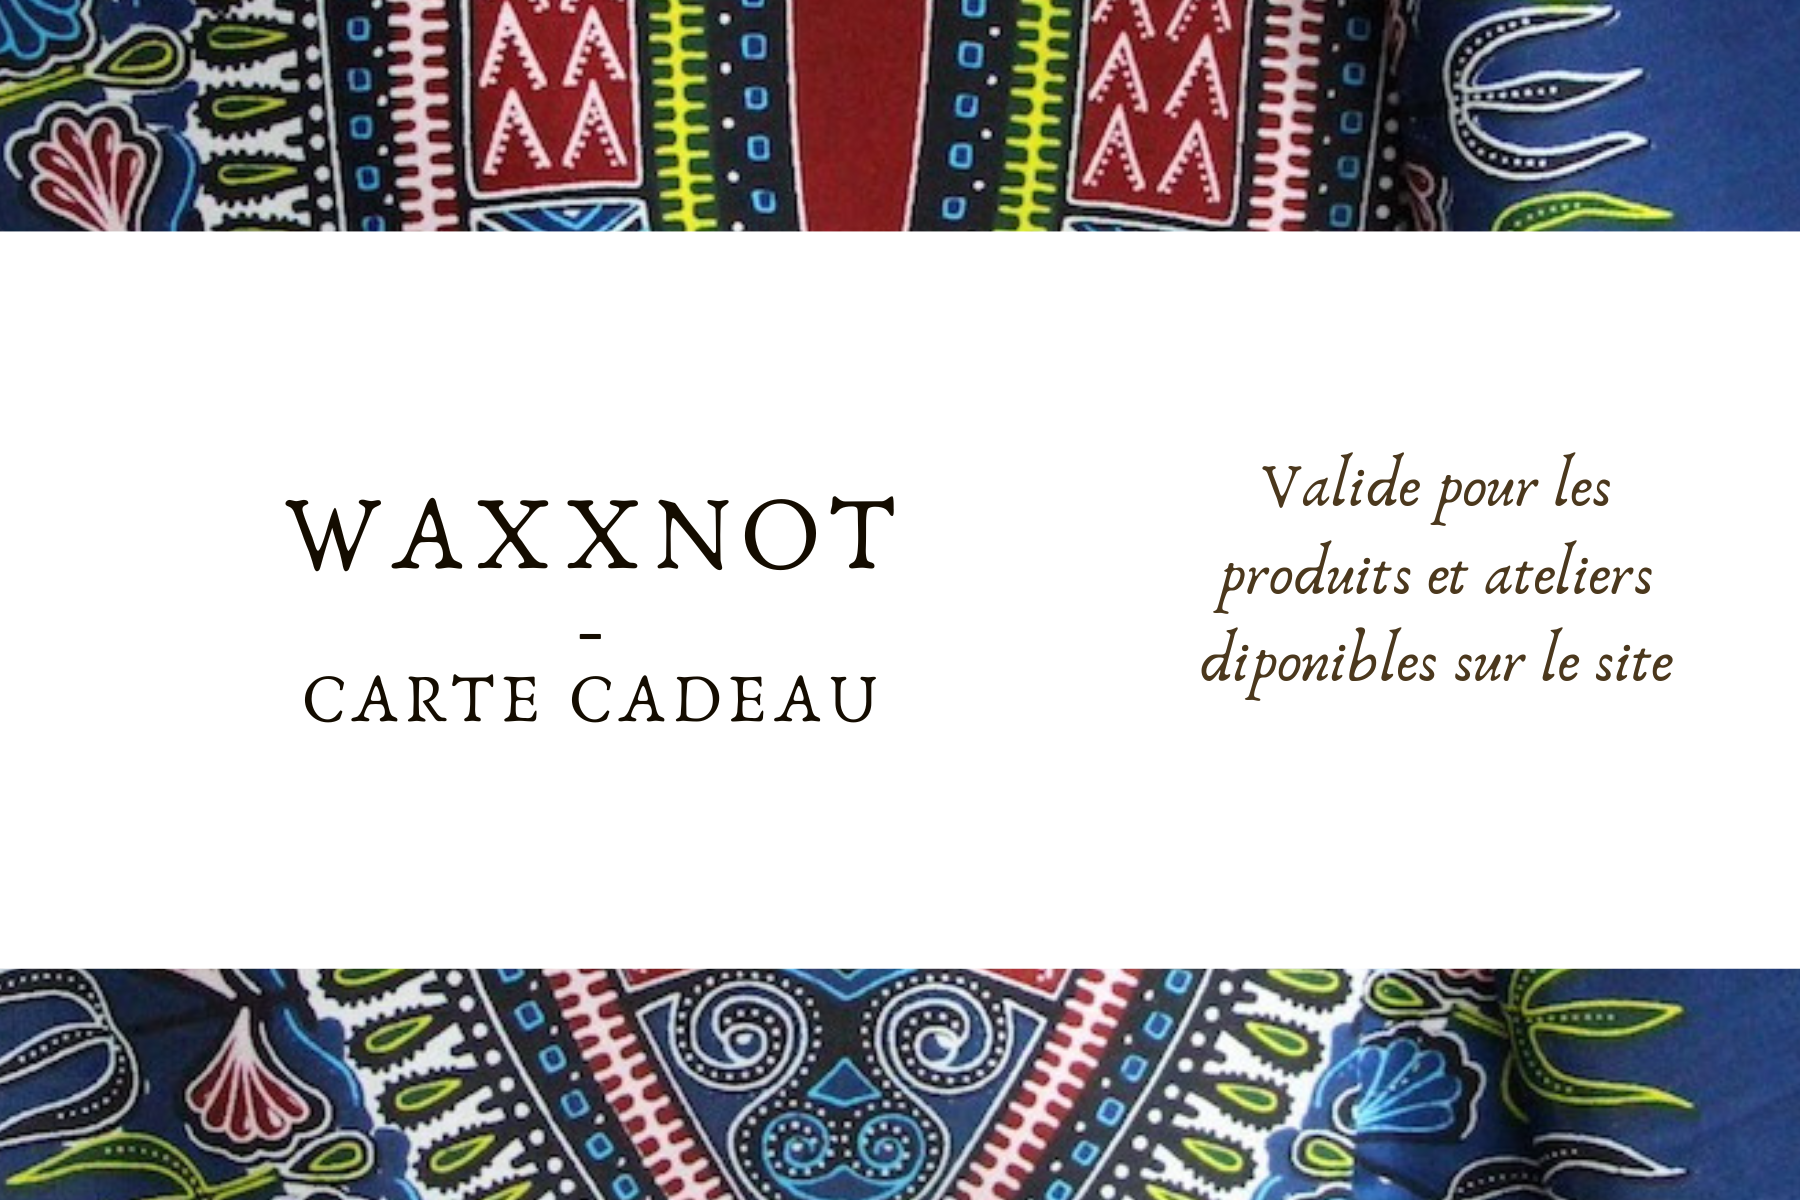 CARTES CADEAUX WAXXNOT